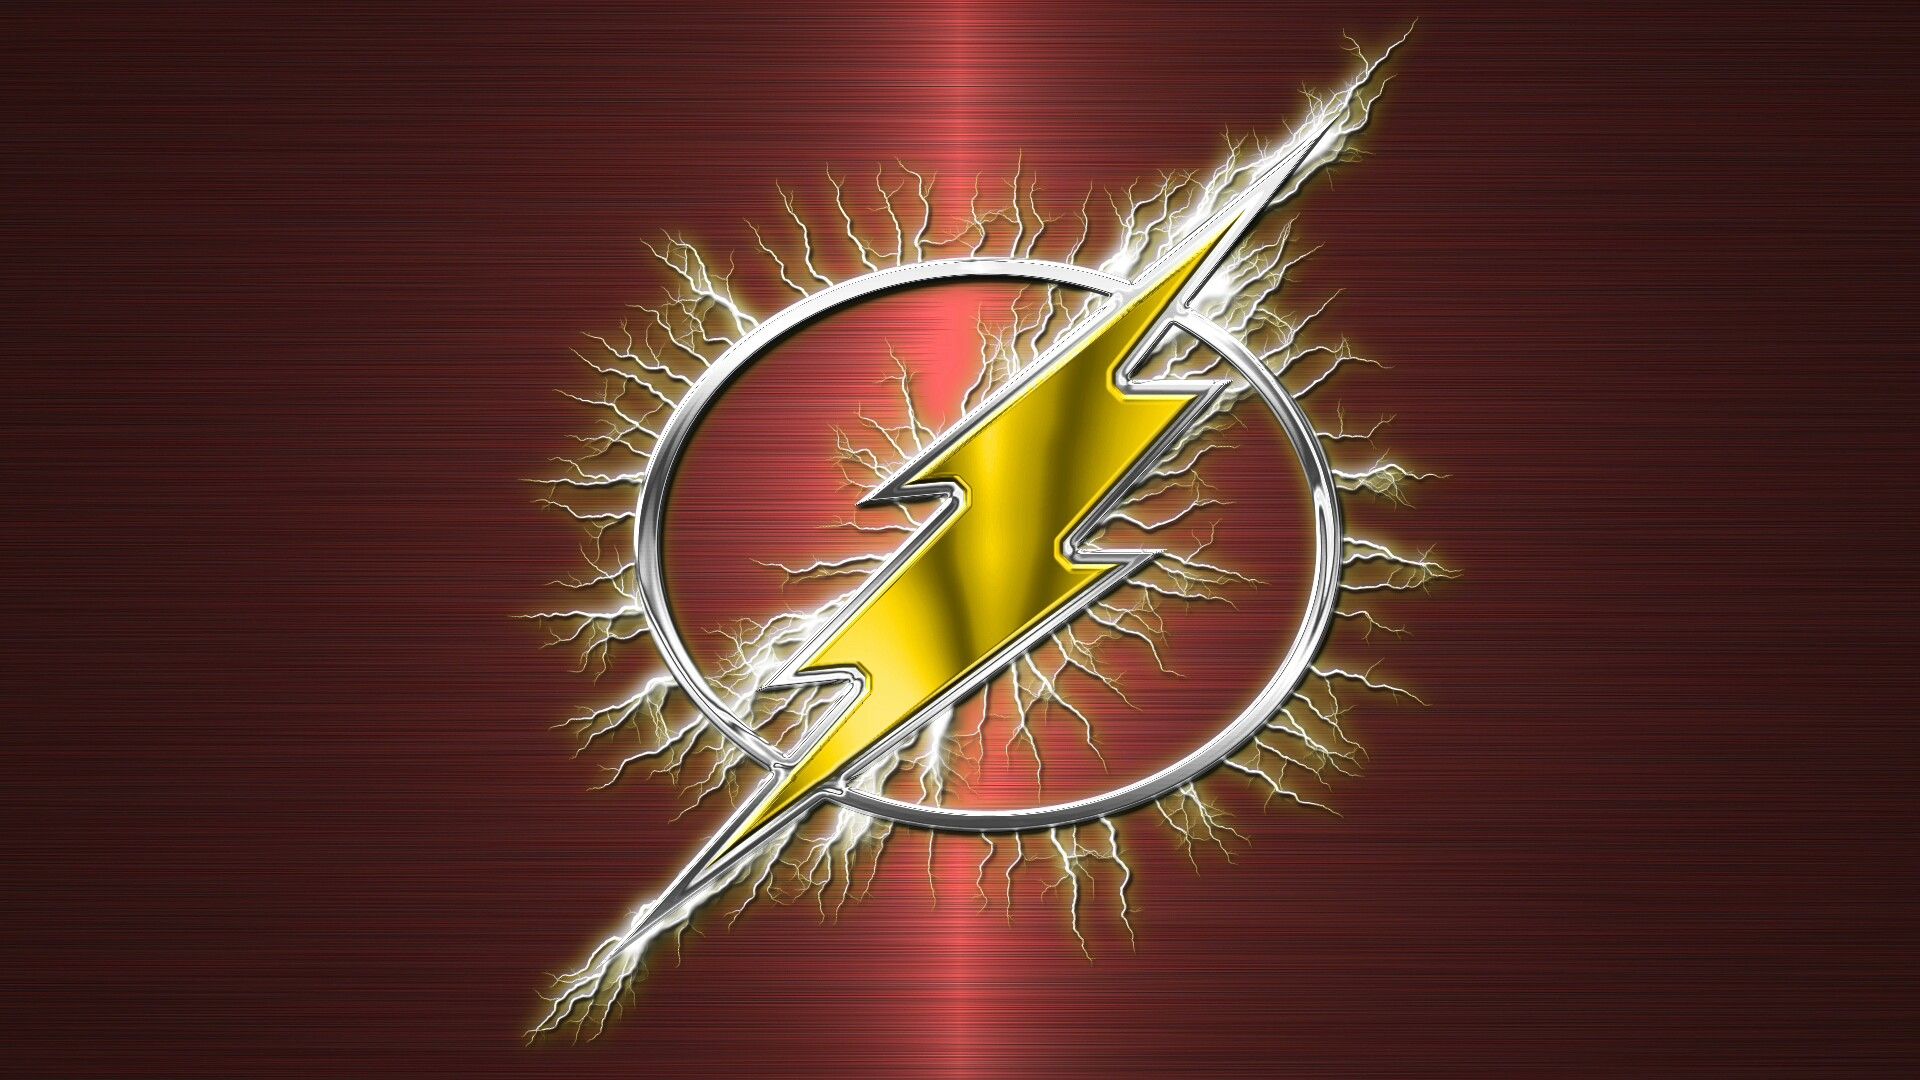 The Flash Logo Wallpaper Live Wallpaper HD. Flash wallpaper, Flash logo, The flash